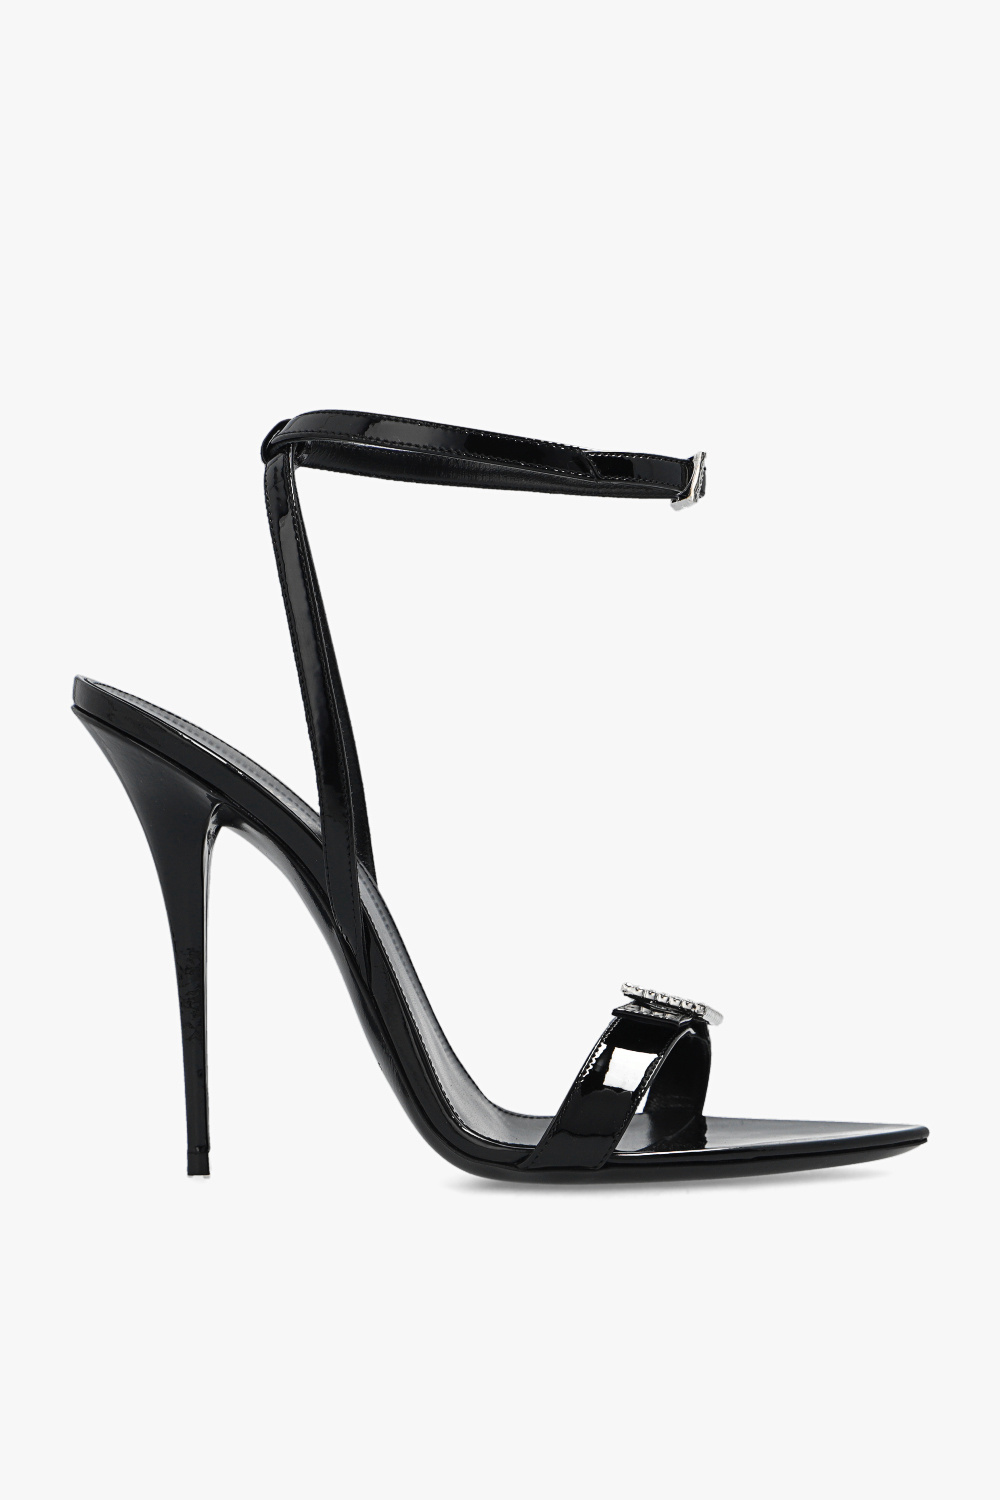 GenesinlifeShops GB - klipsy z logo saint laurent ozdoba - Black 'Claude'  heeled sandals Saint Laurent